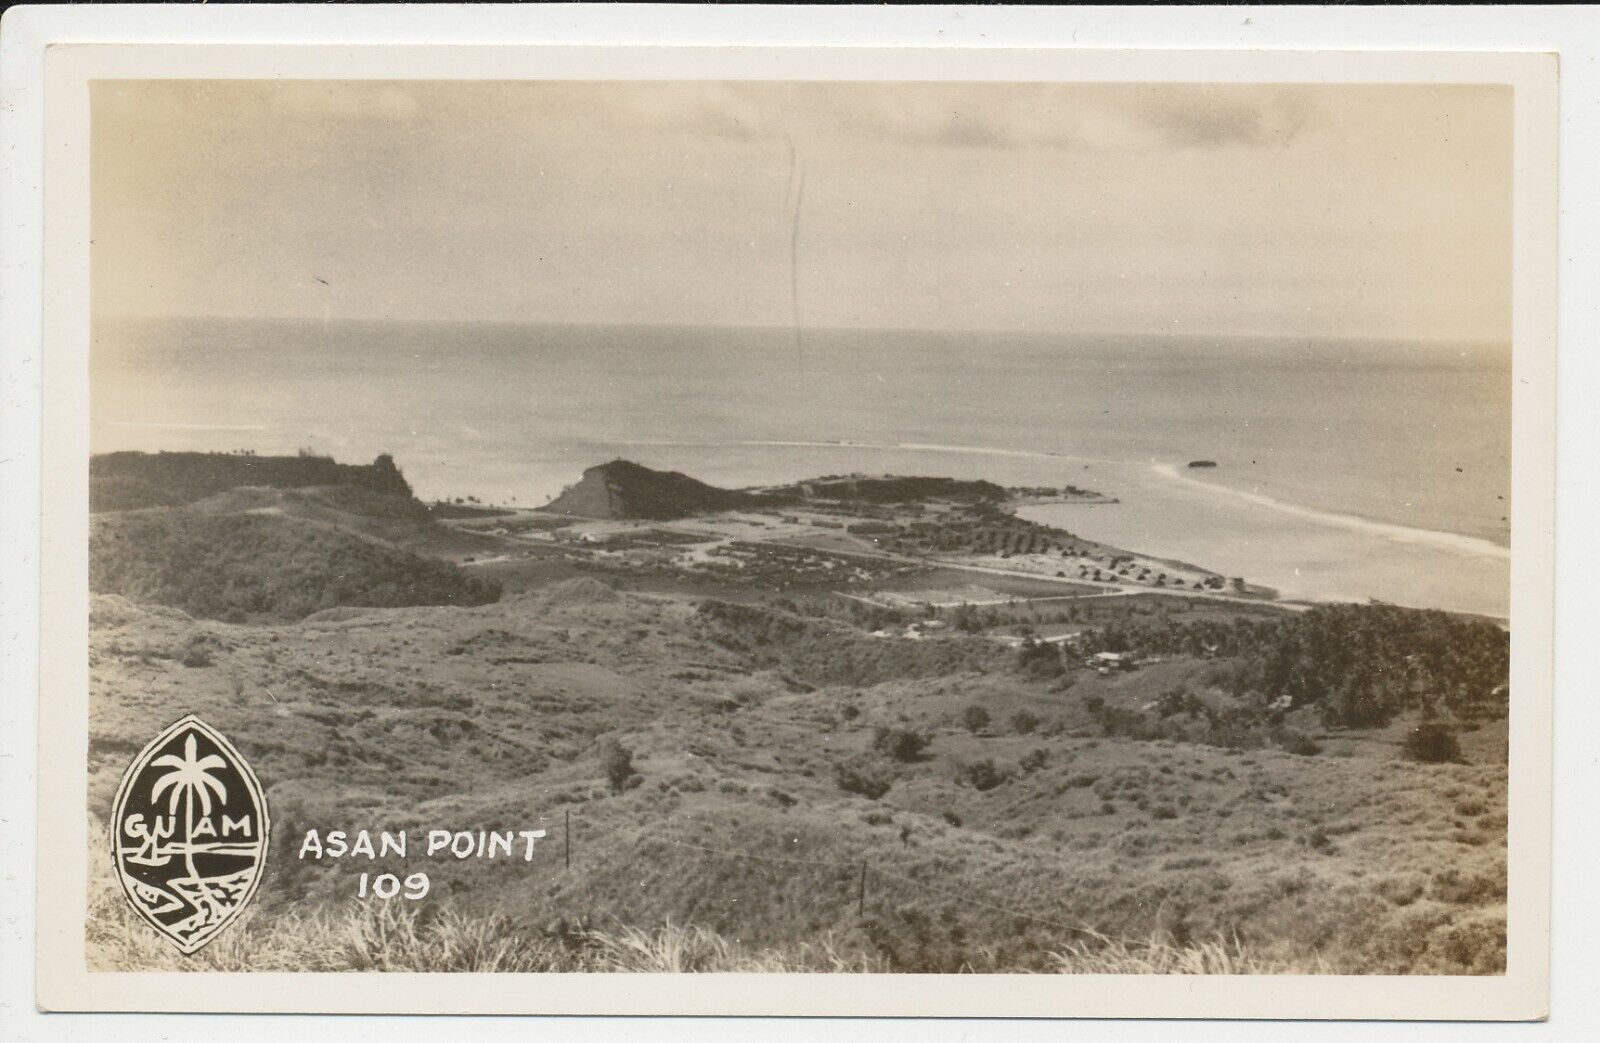 Guam - Asan Point - real photo postcard